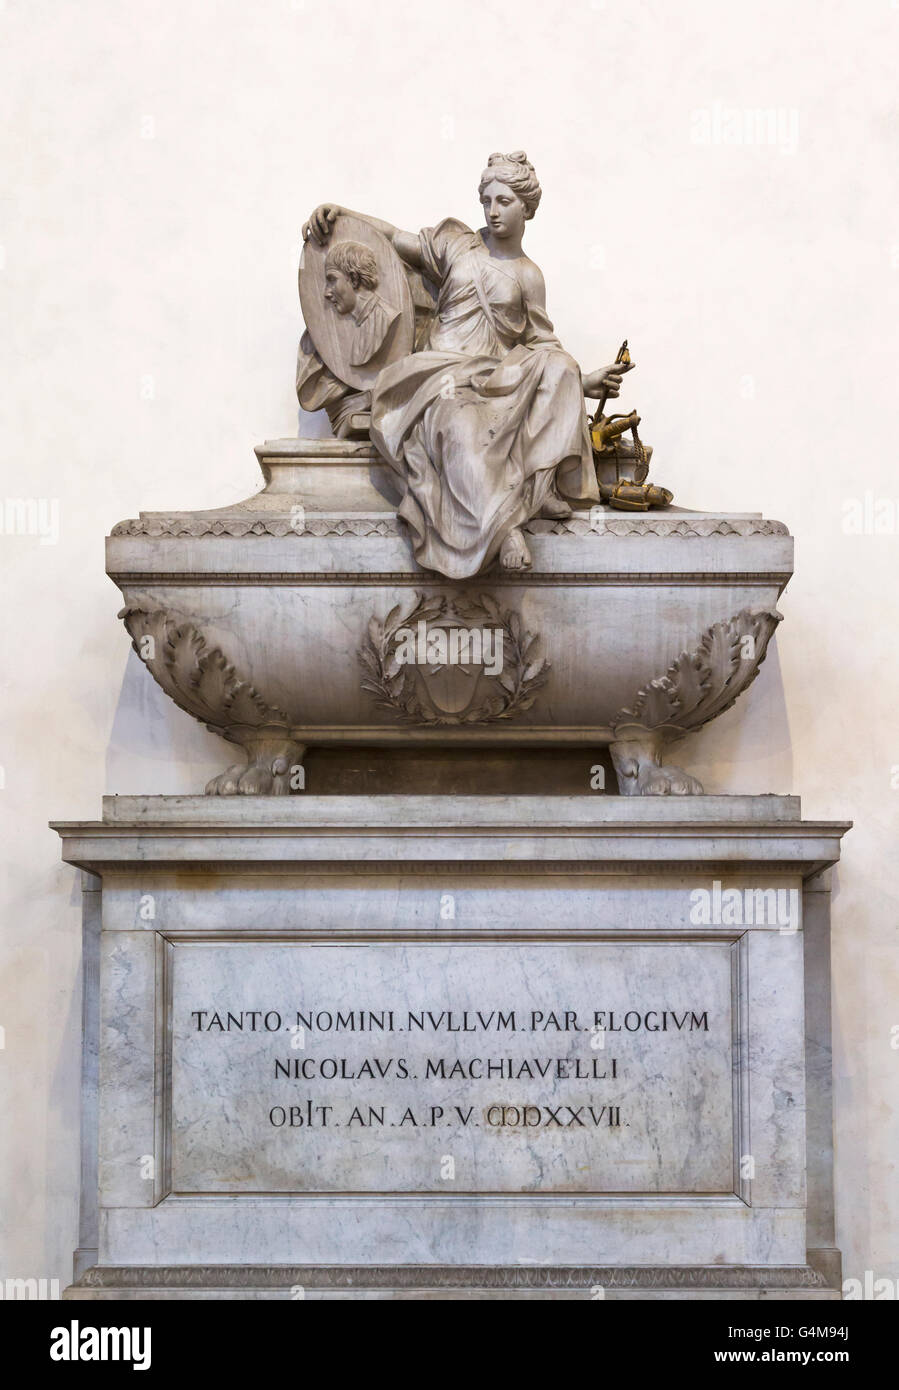 Florencia, Toscana, Italia. La Basílica de la Santa Croce. Tumba de Niccolò Machiavelli. Foto de stock